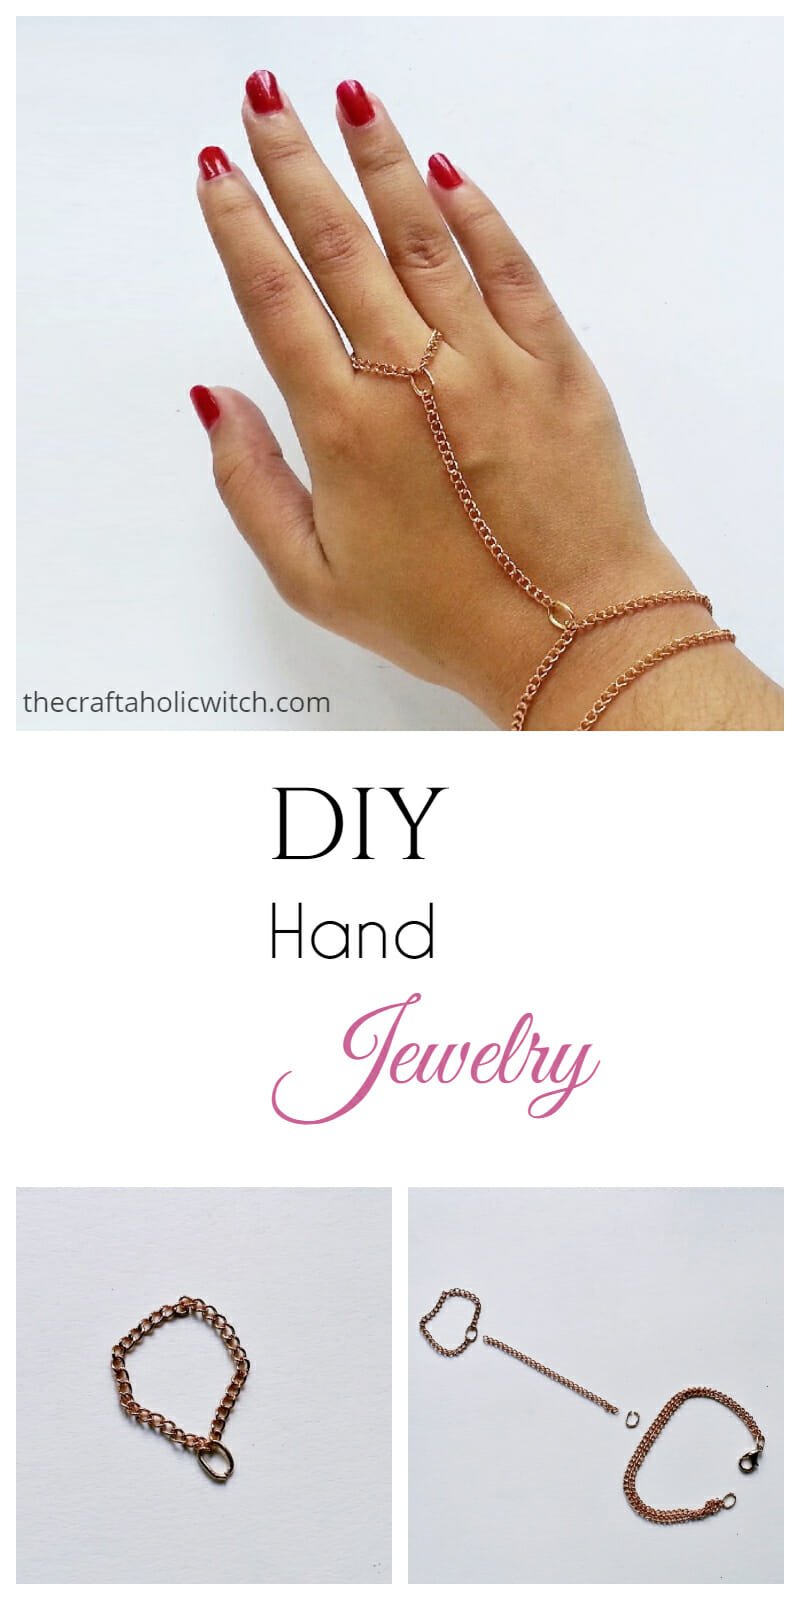 hand jewelry pin image - DIY Hand Jewelry